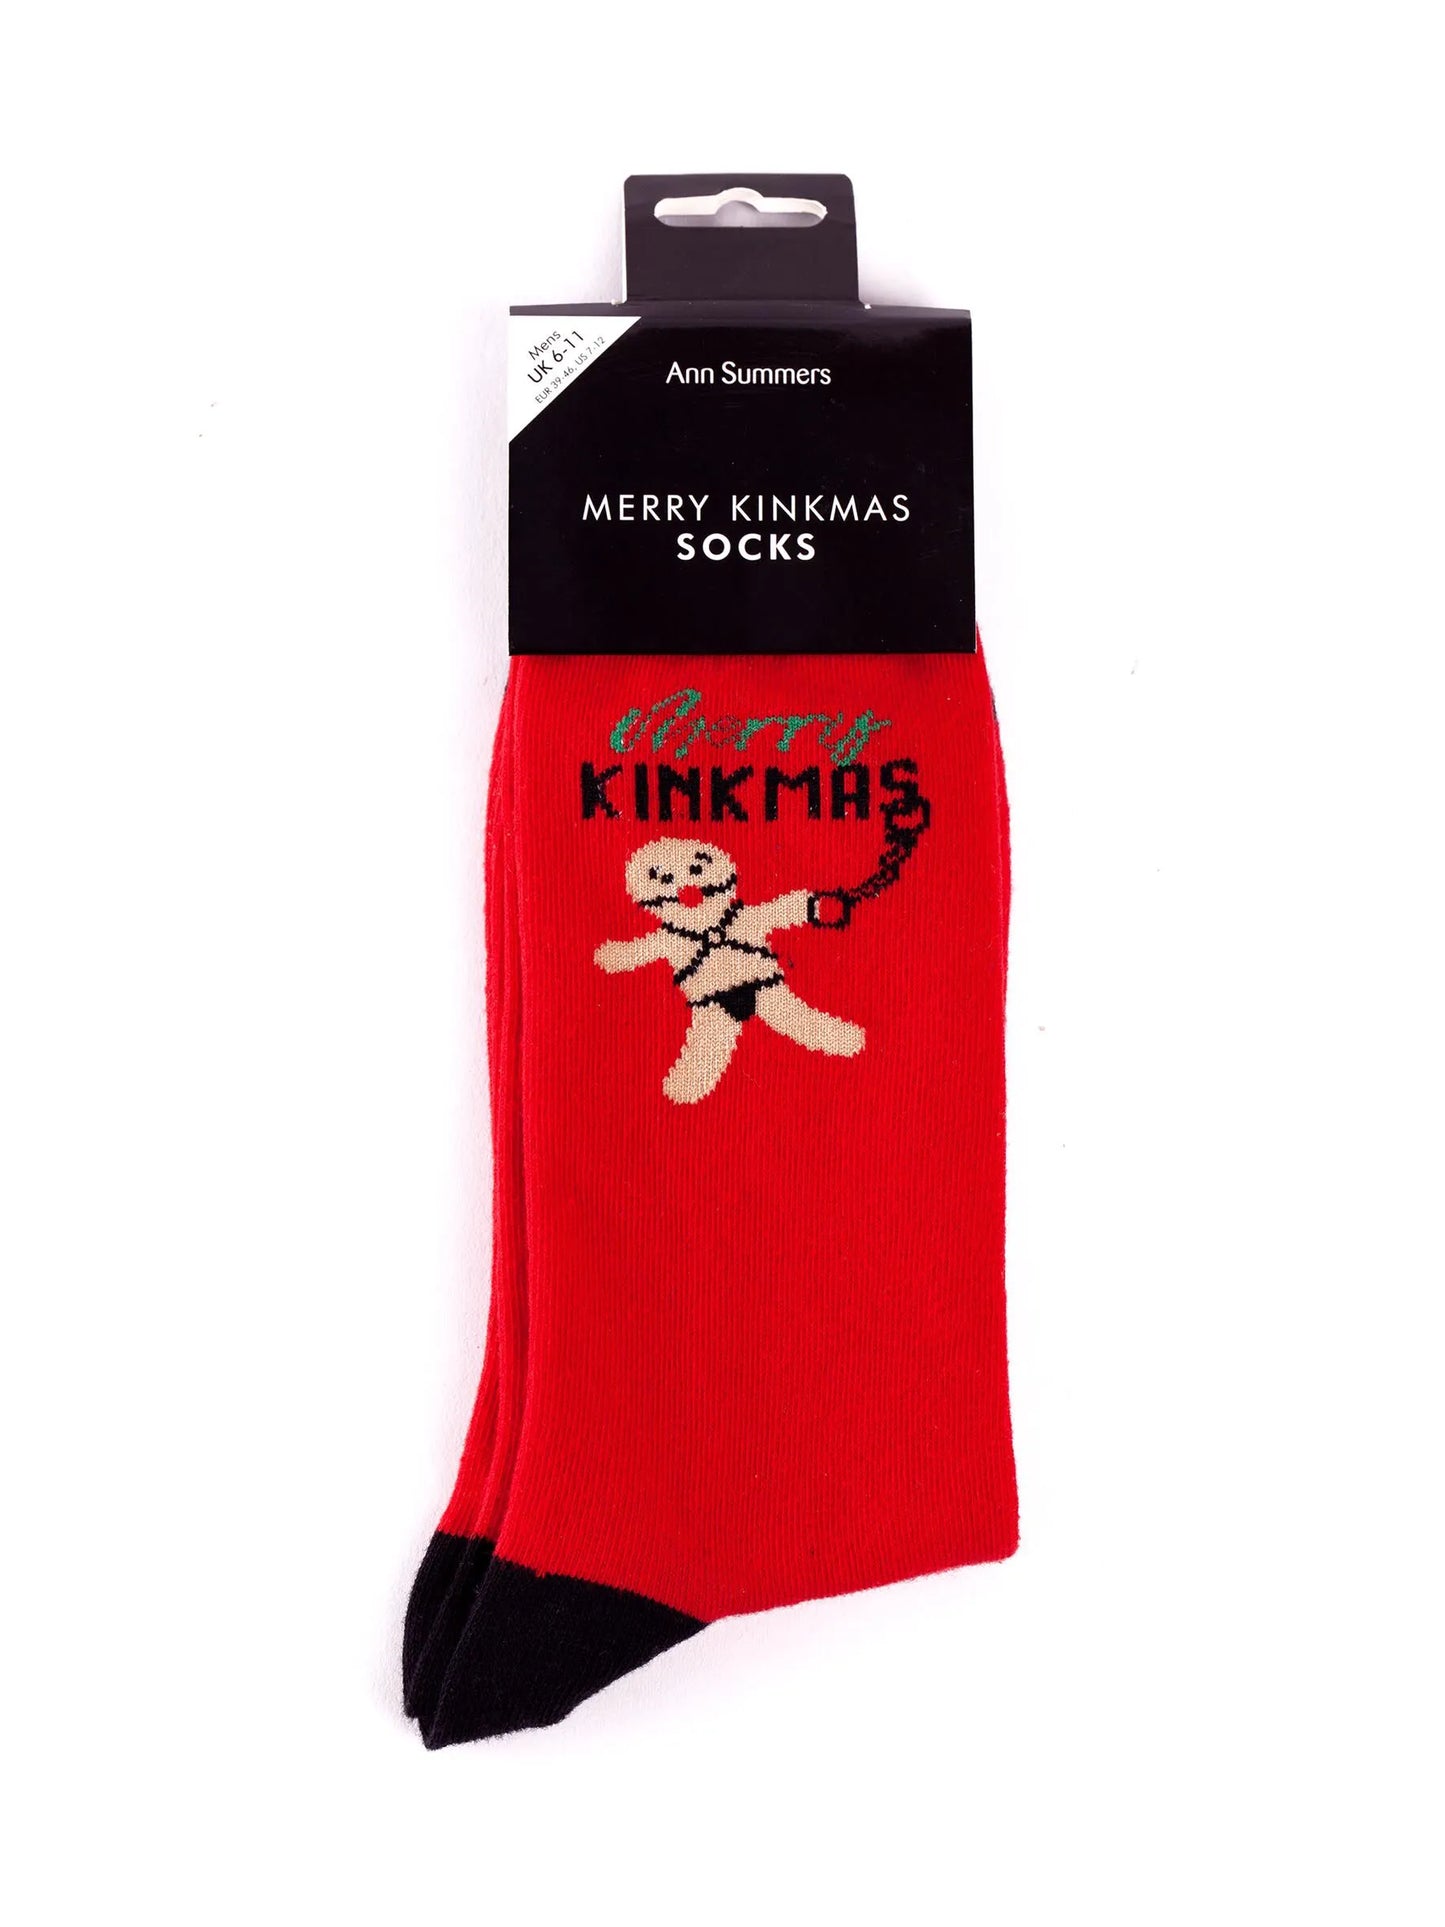 Merry Kinkmas Mens Socks From Ann Summers, Image 02